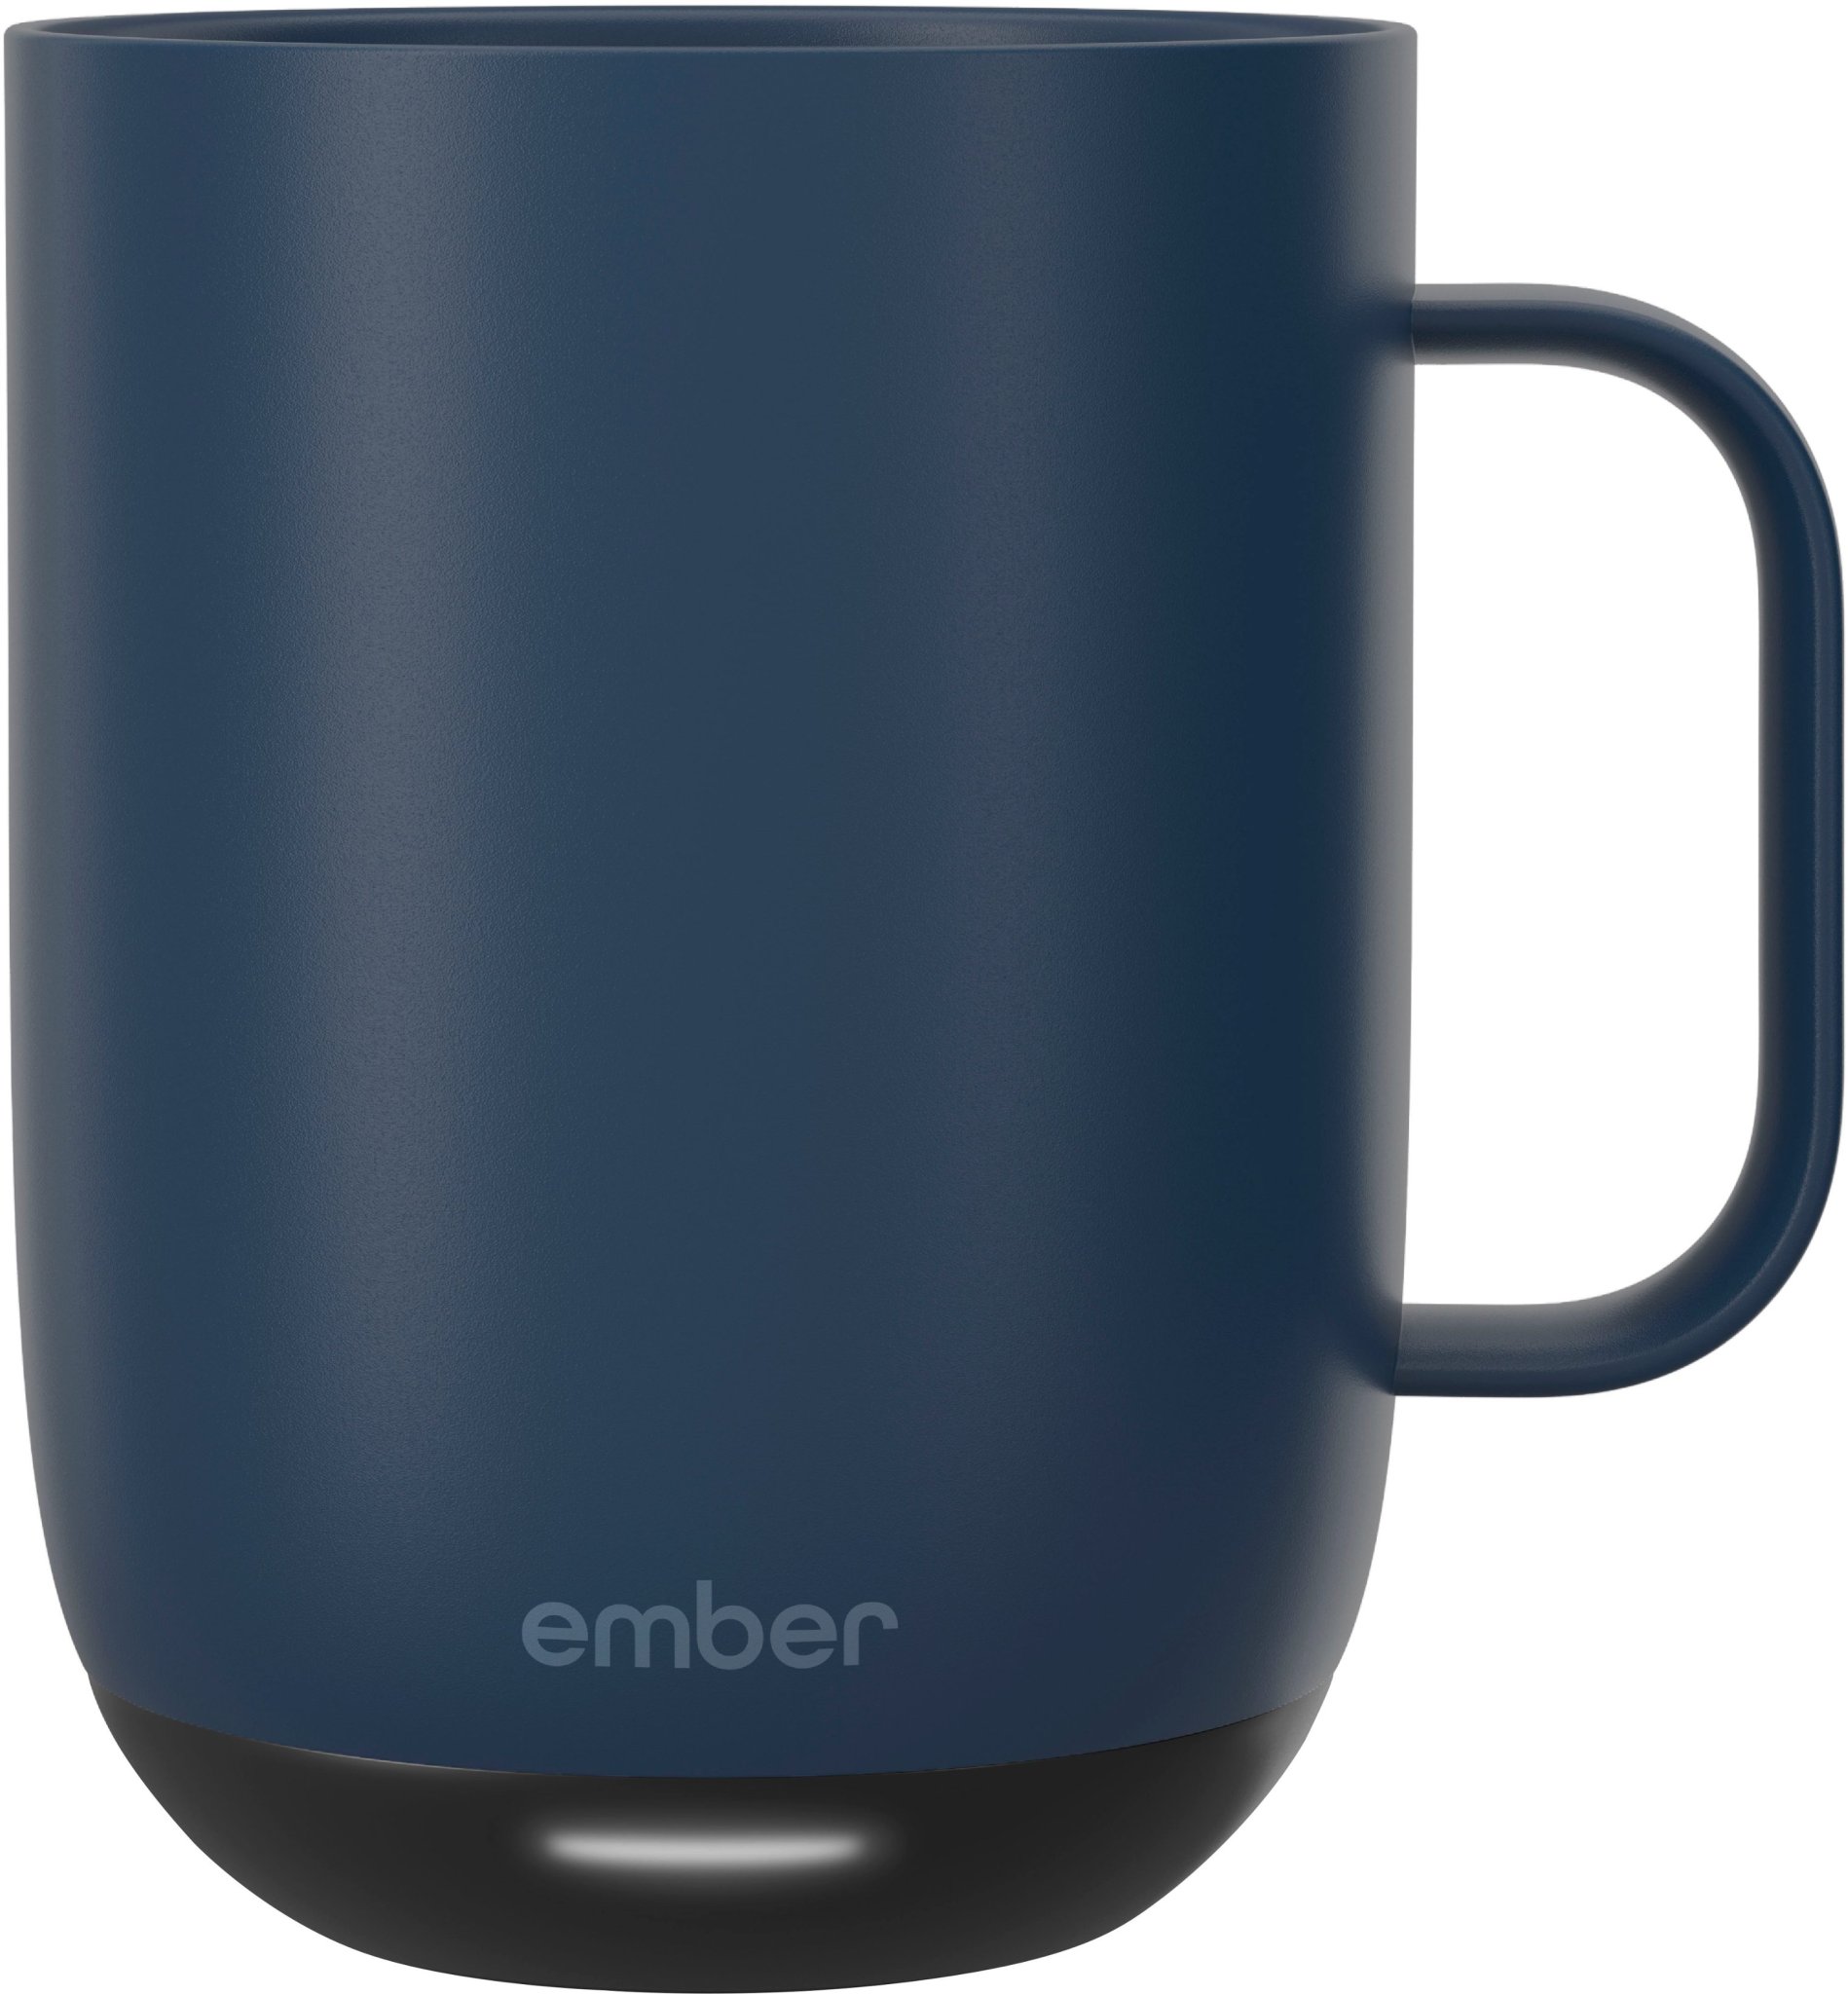 This smart mug keeps beverages at the perfect temperature